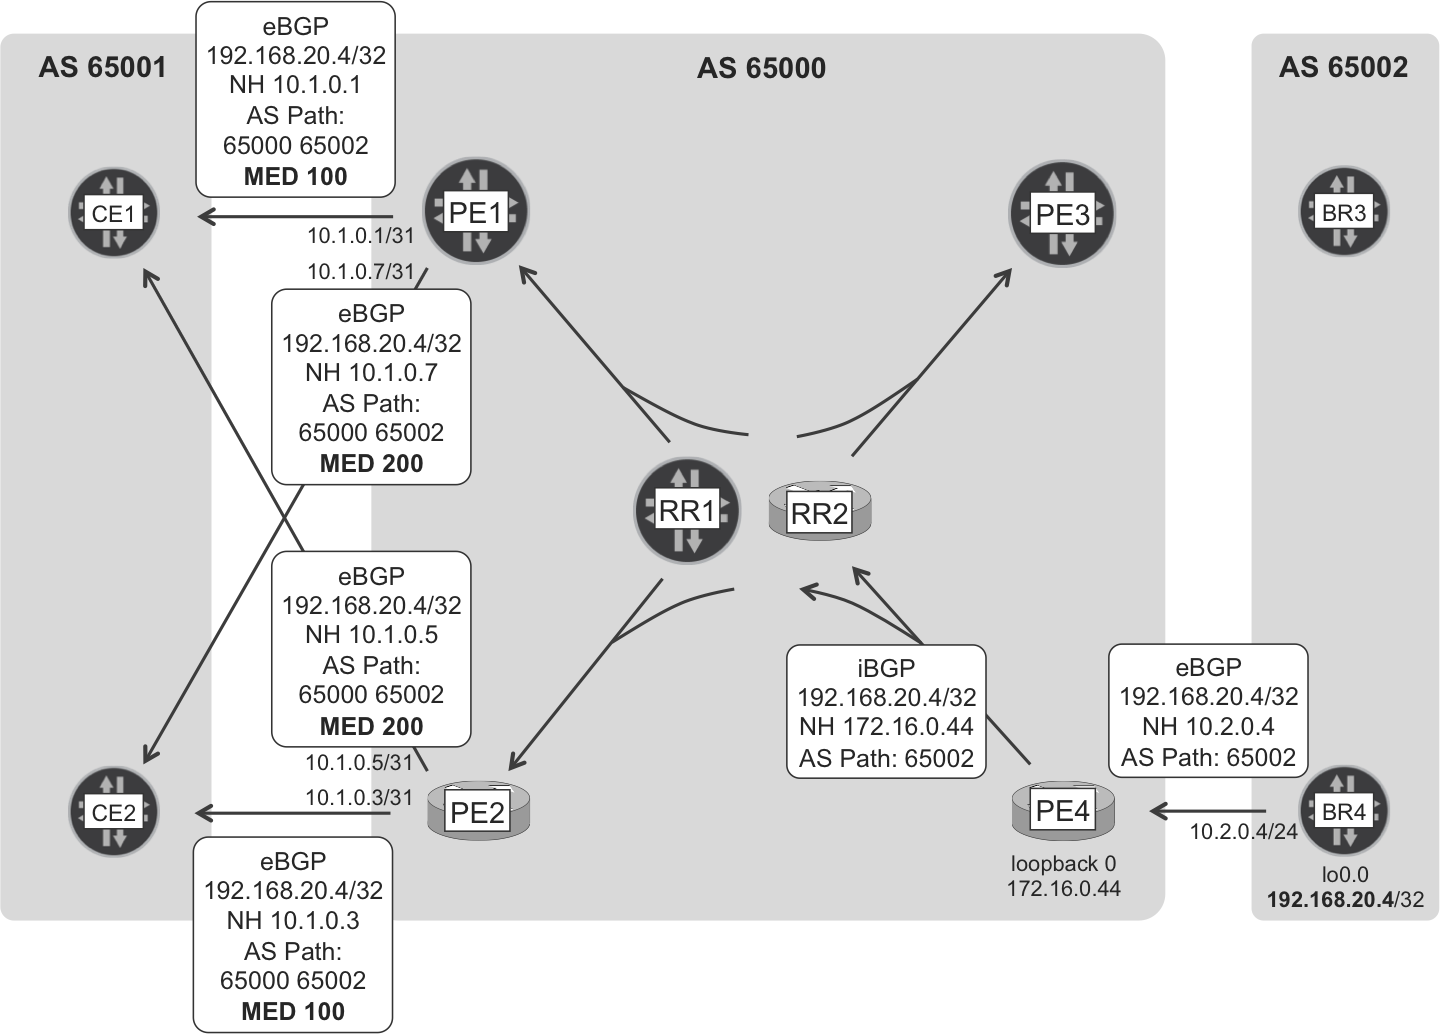 Internet eBGP and iBGP route signaling—BR4 loopback